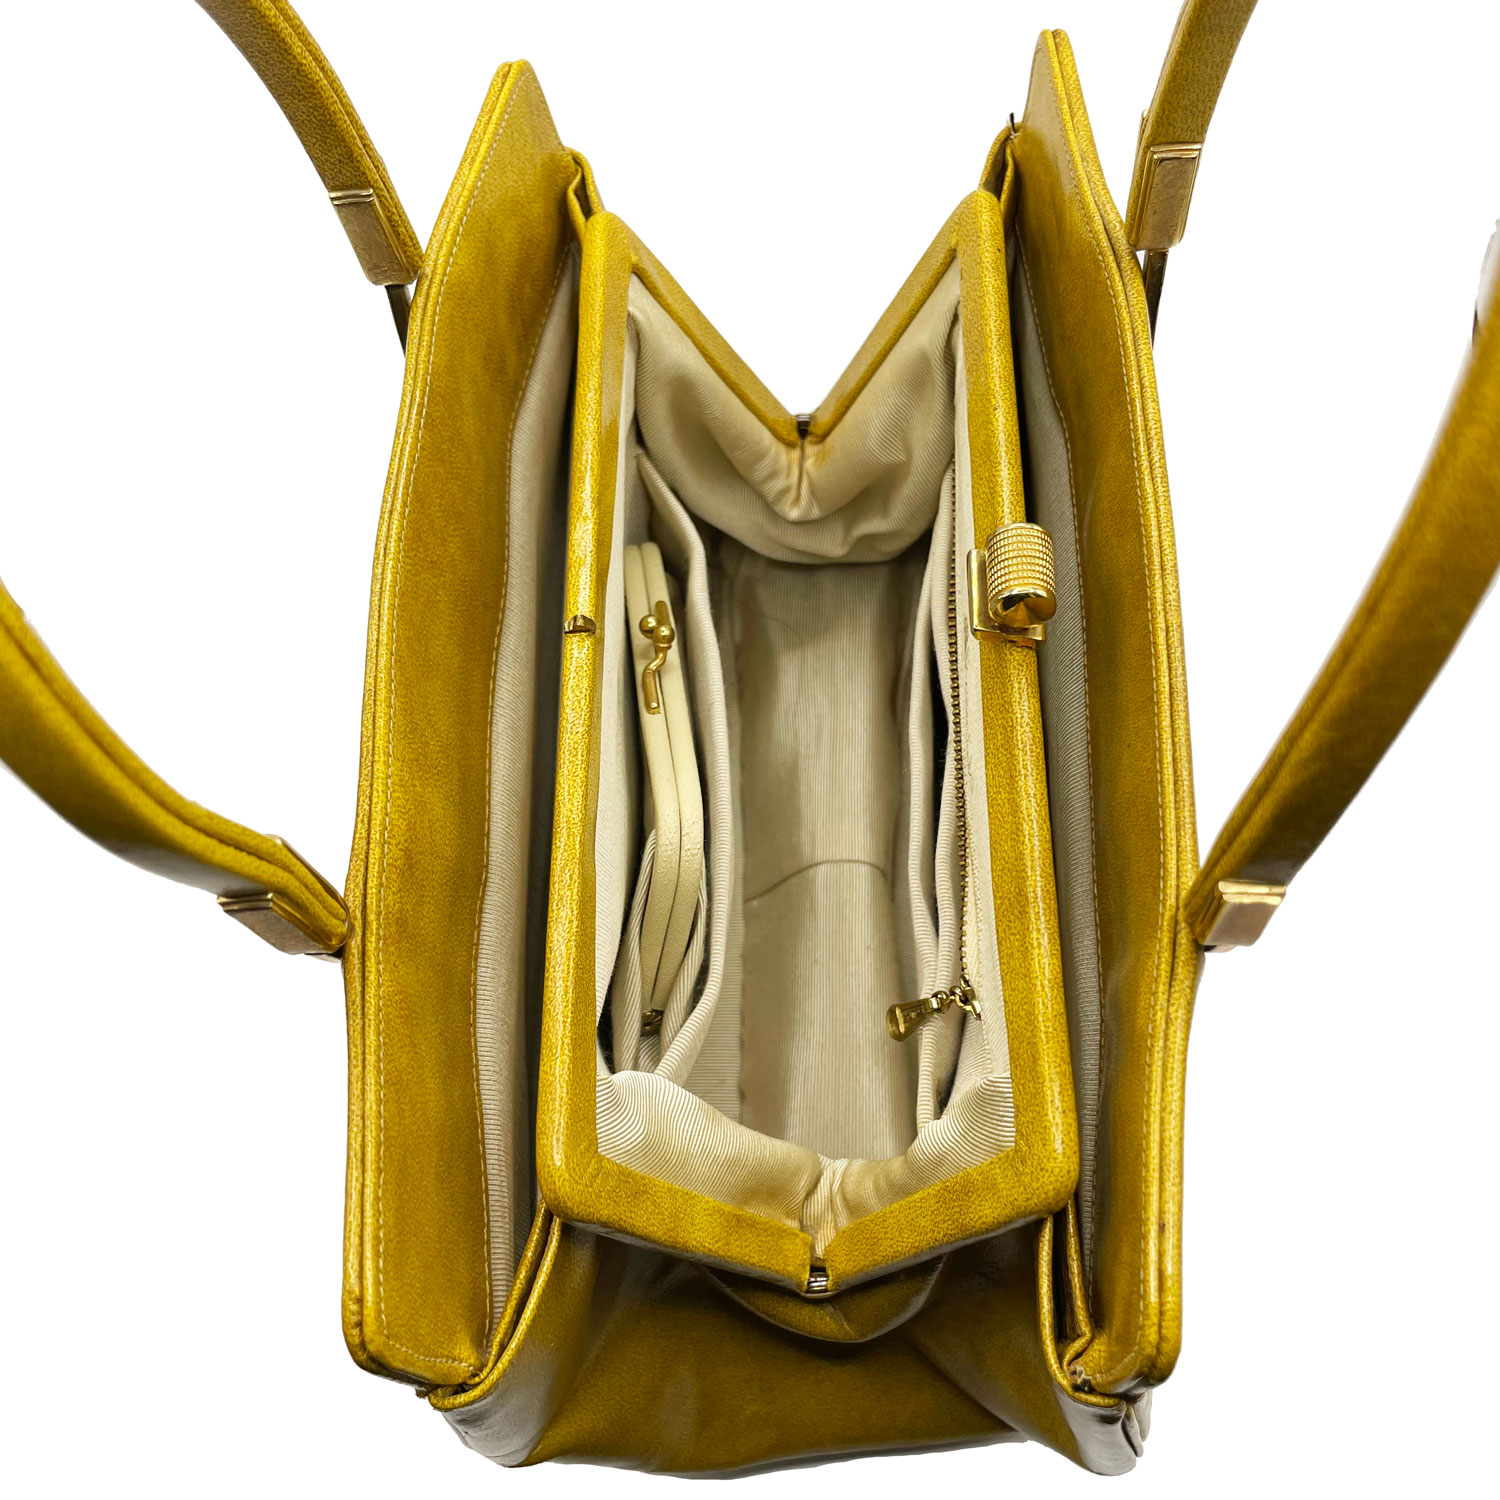 1960s mustard yellow leather purse